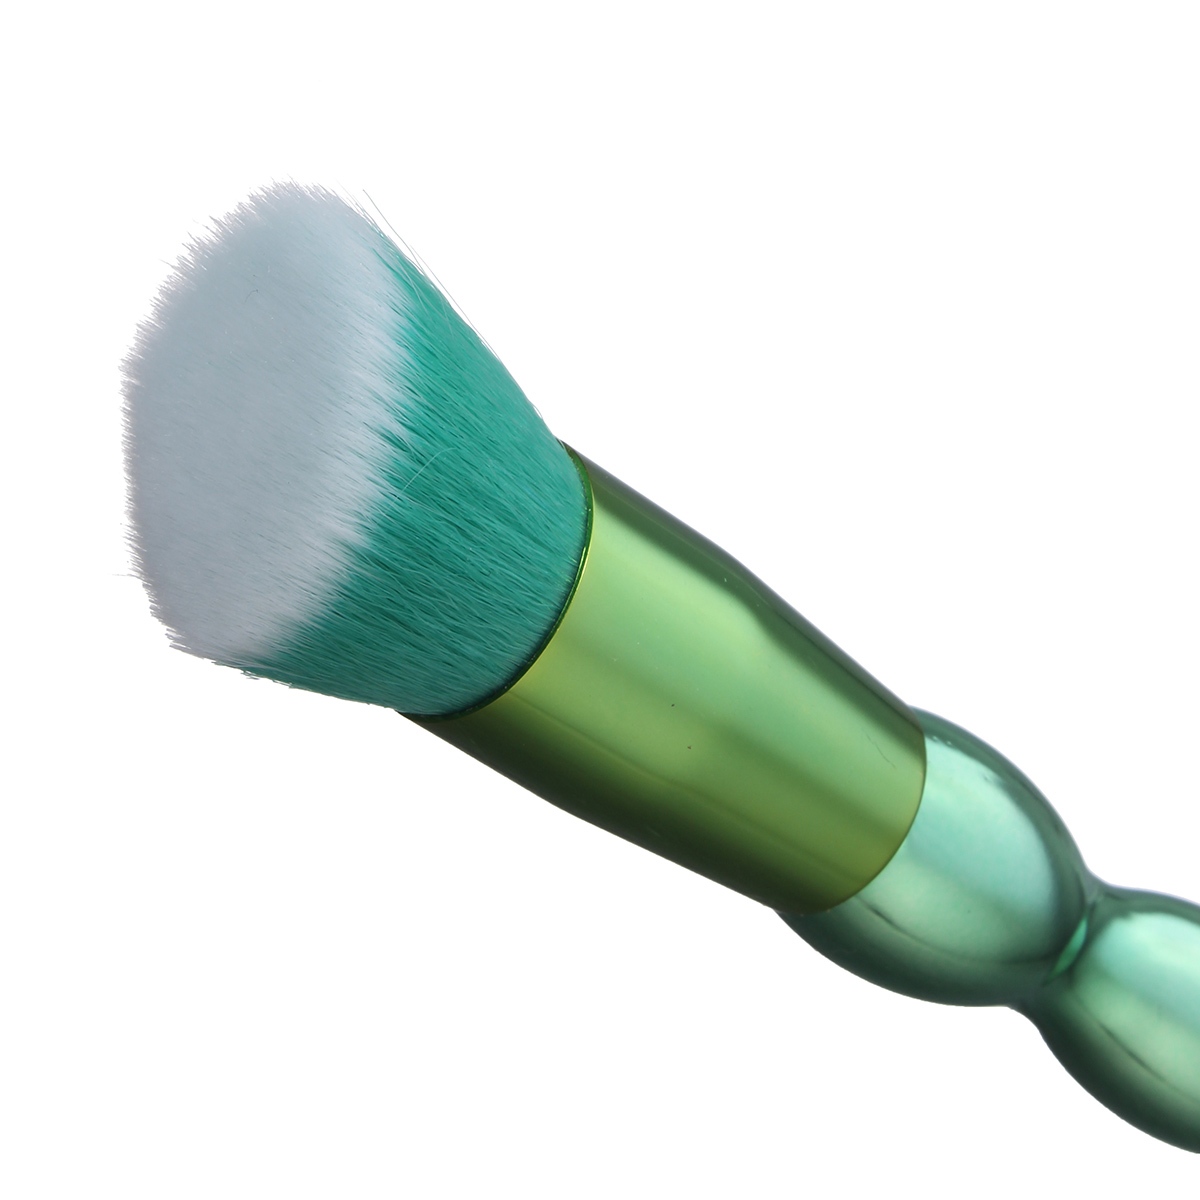 8pcs-Mint-Green-Soft-Hair-Makeup-Brushes-Kit-Cosmetic-Foundation-Powder-Blush-Eyeliner-Eyeshadow-1135177